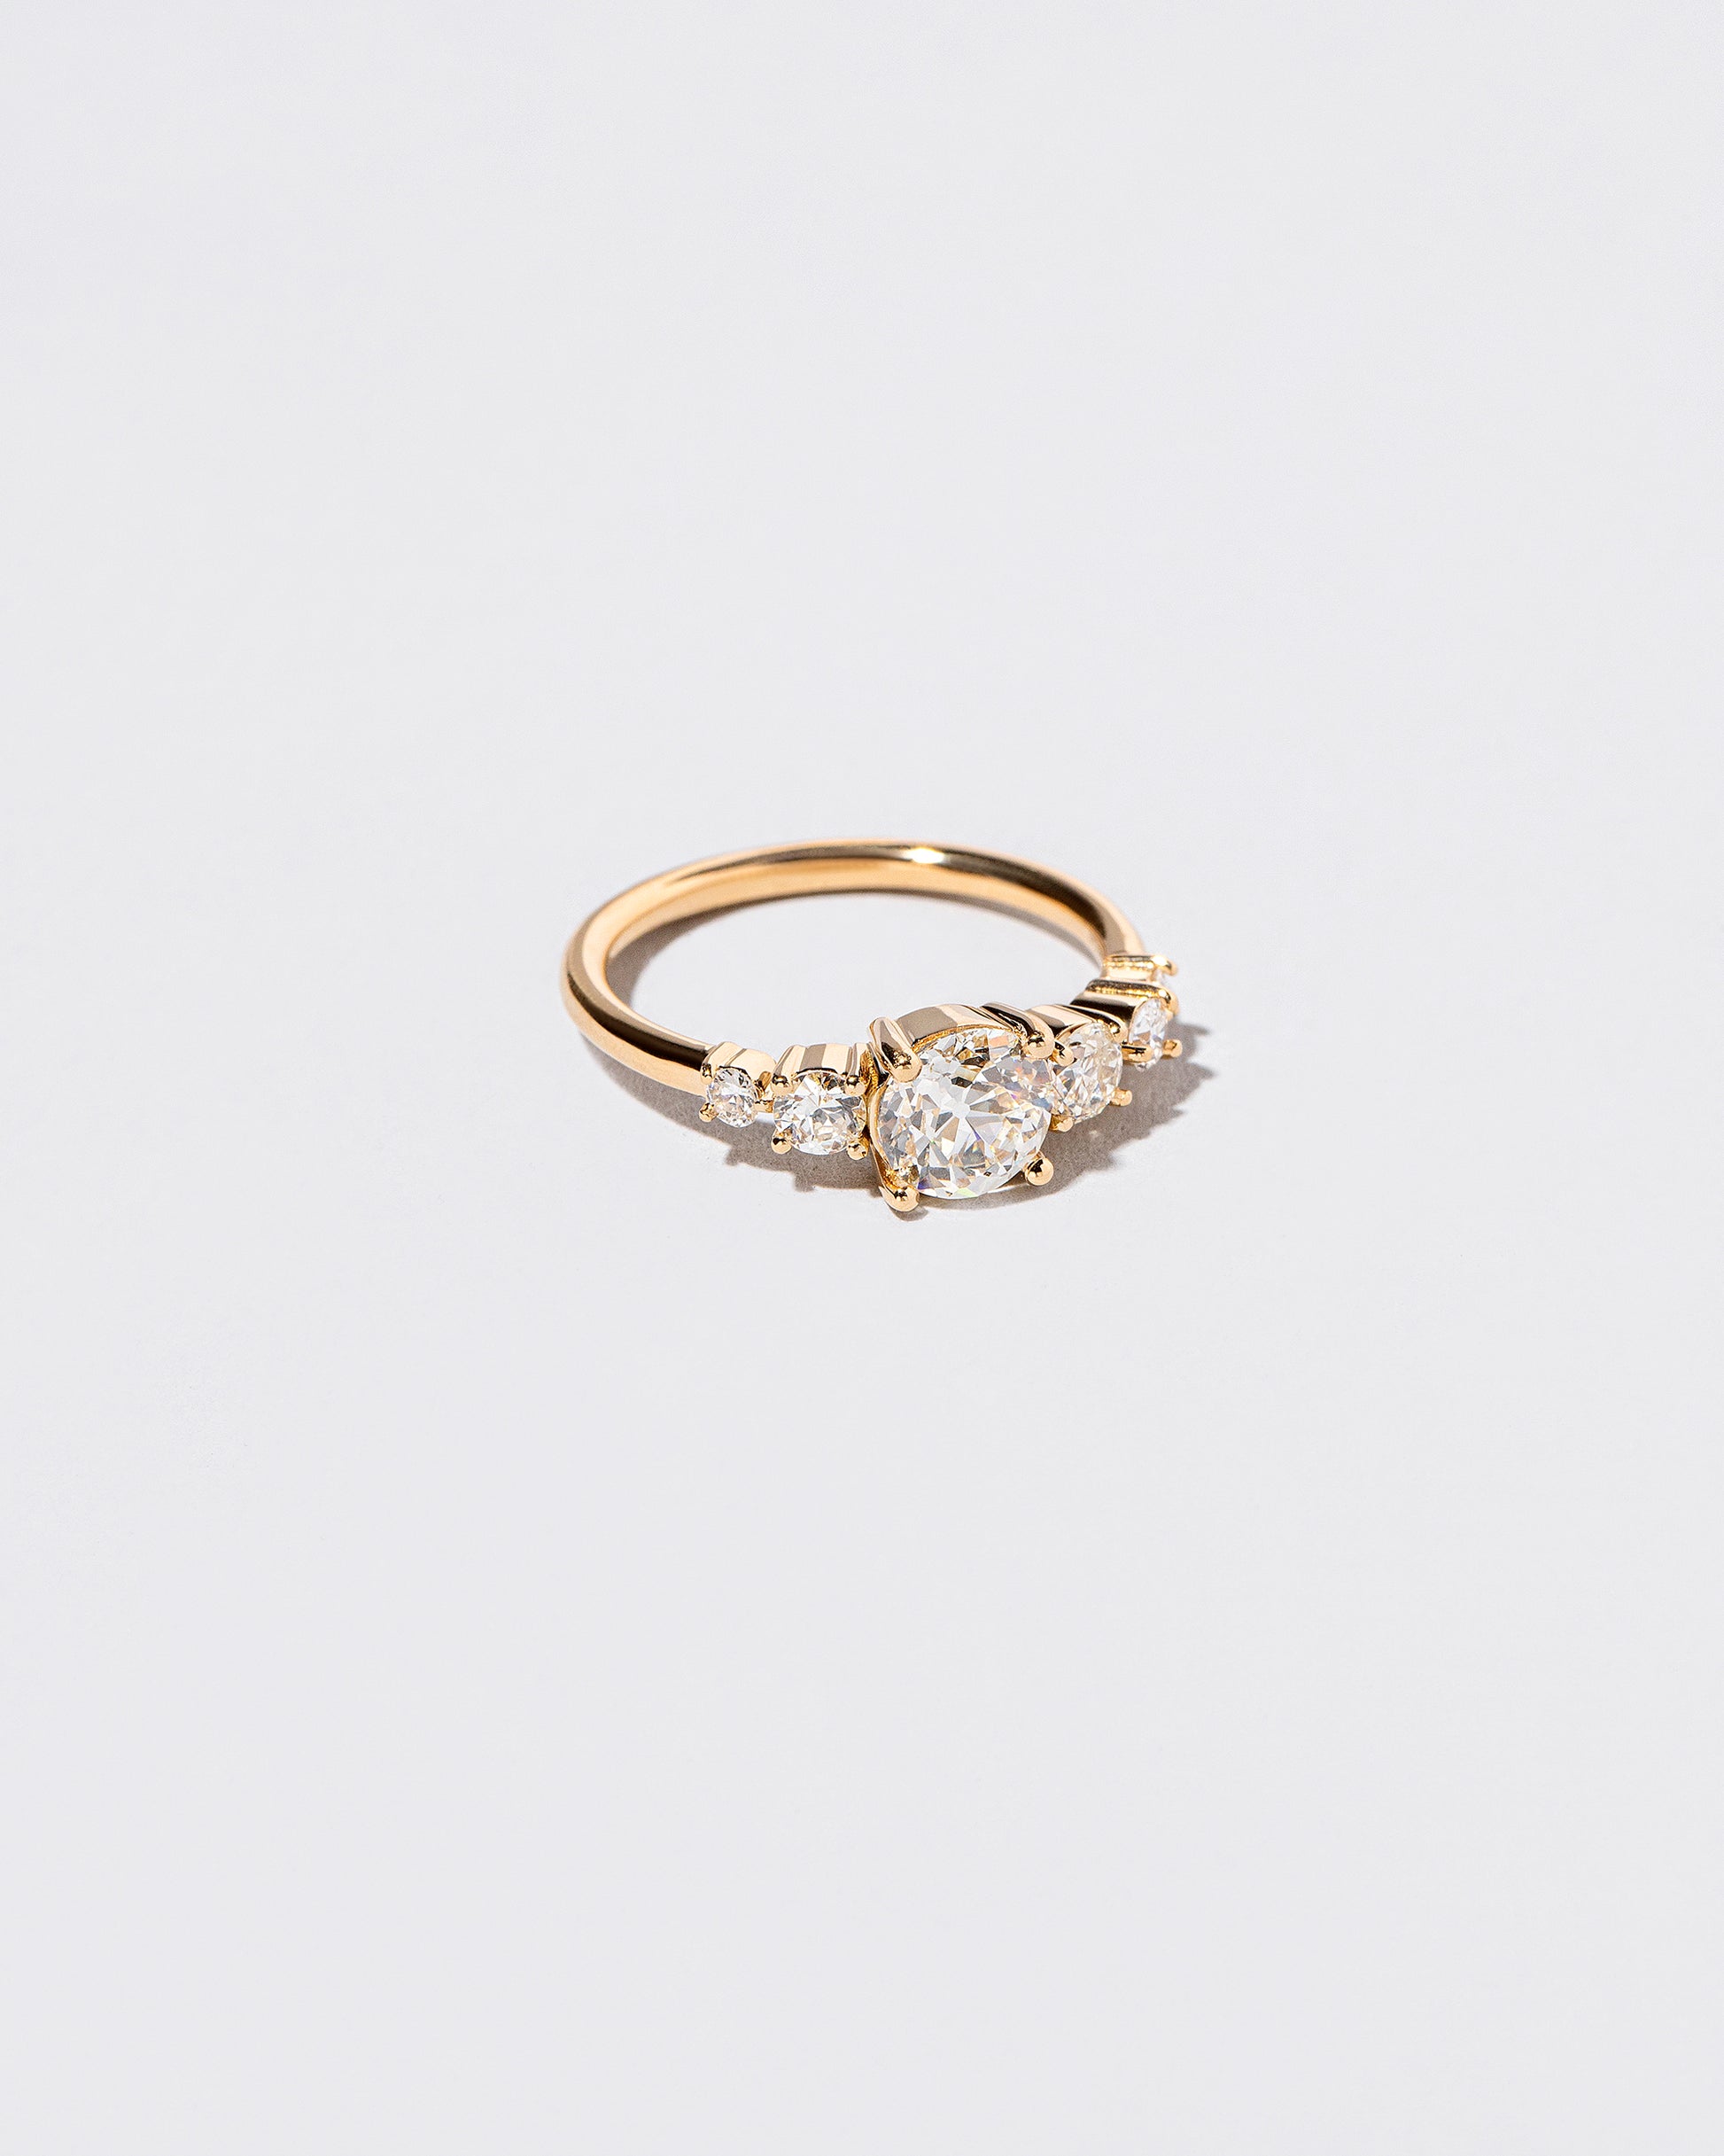 Capella Ring - White Diamond on light color background.